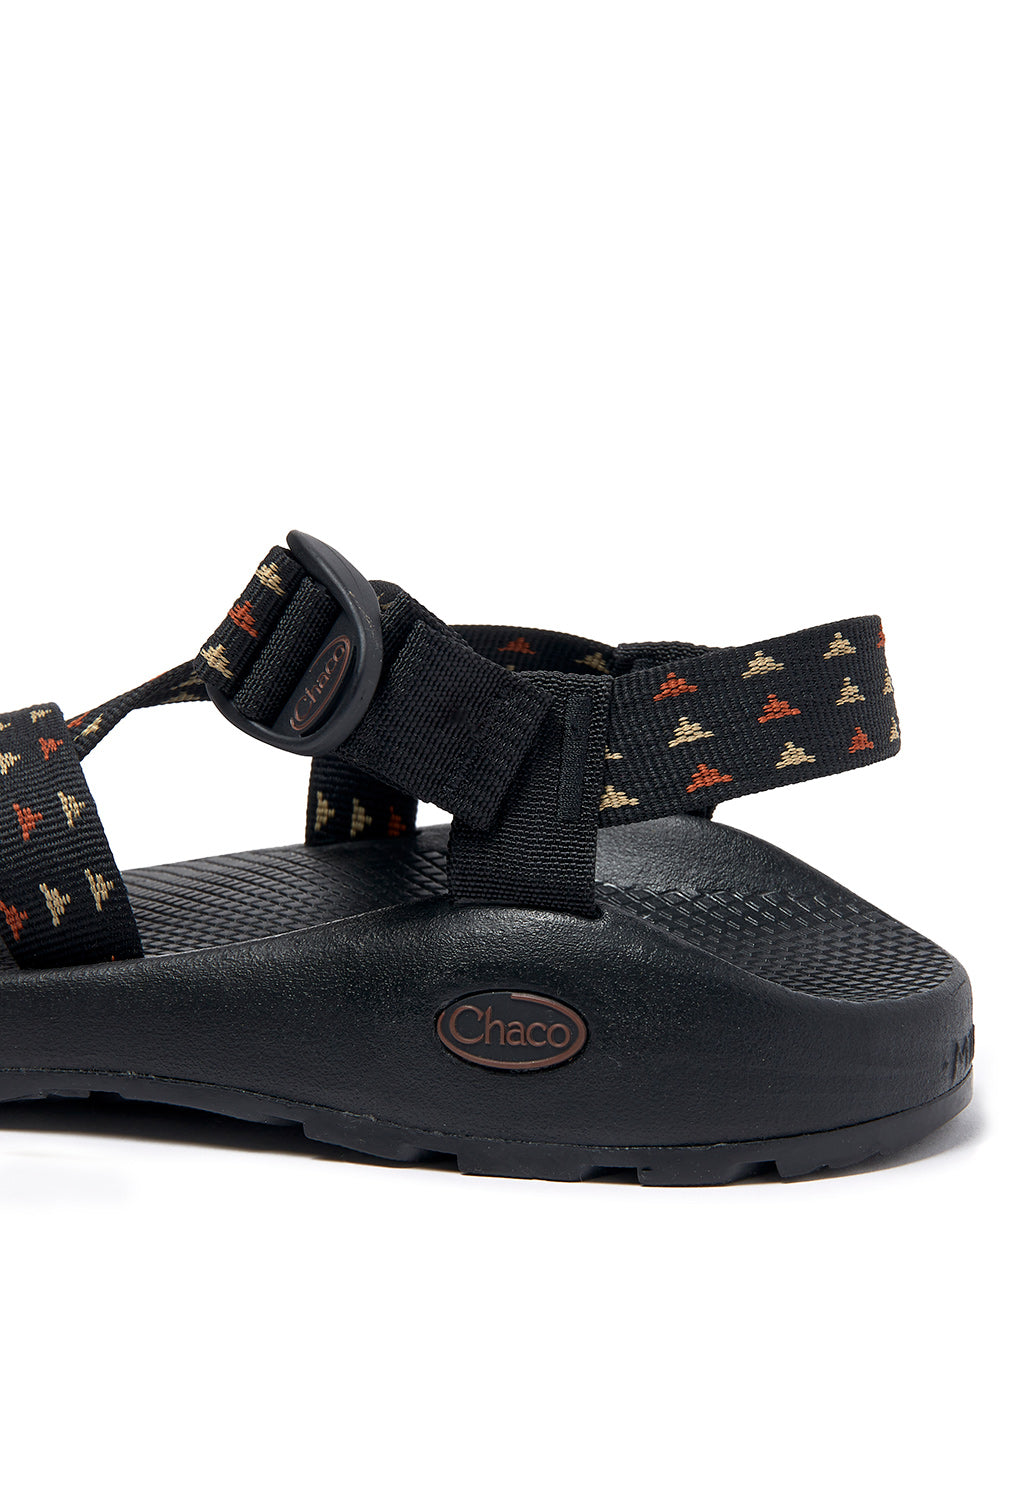 Chaco Men's Z1 Classic Sandals - Sierra Black